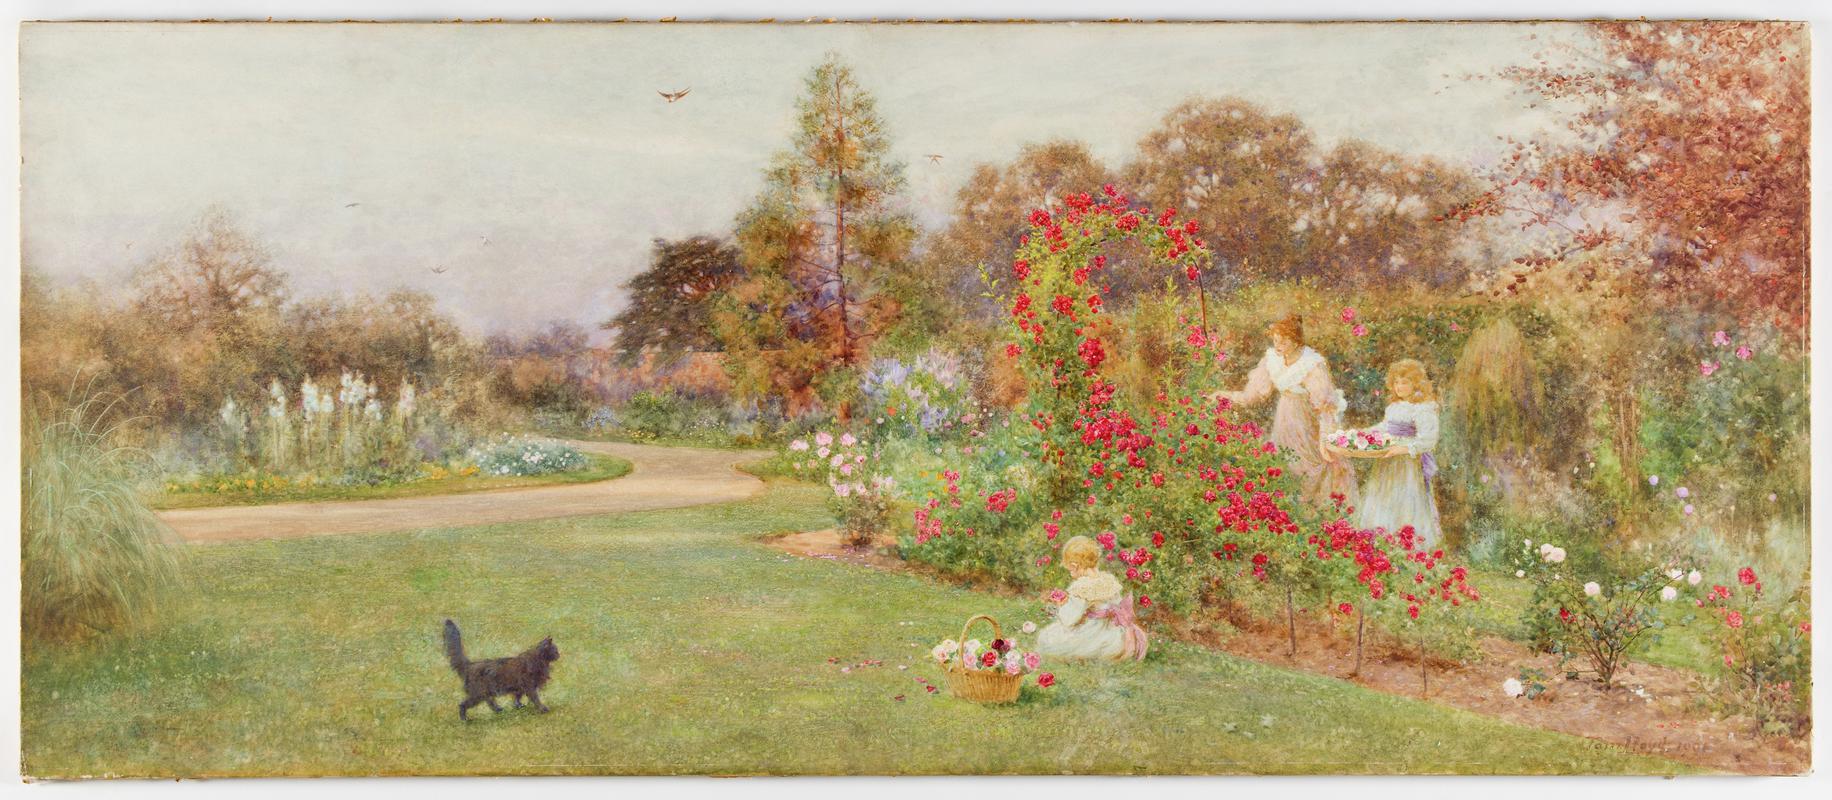 Gathering Roses in the Artist's Garden